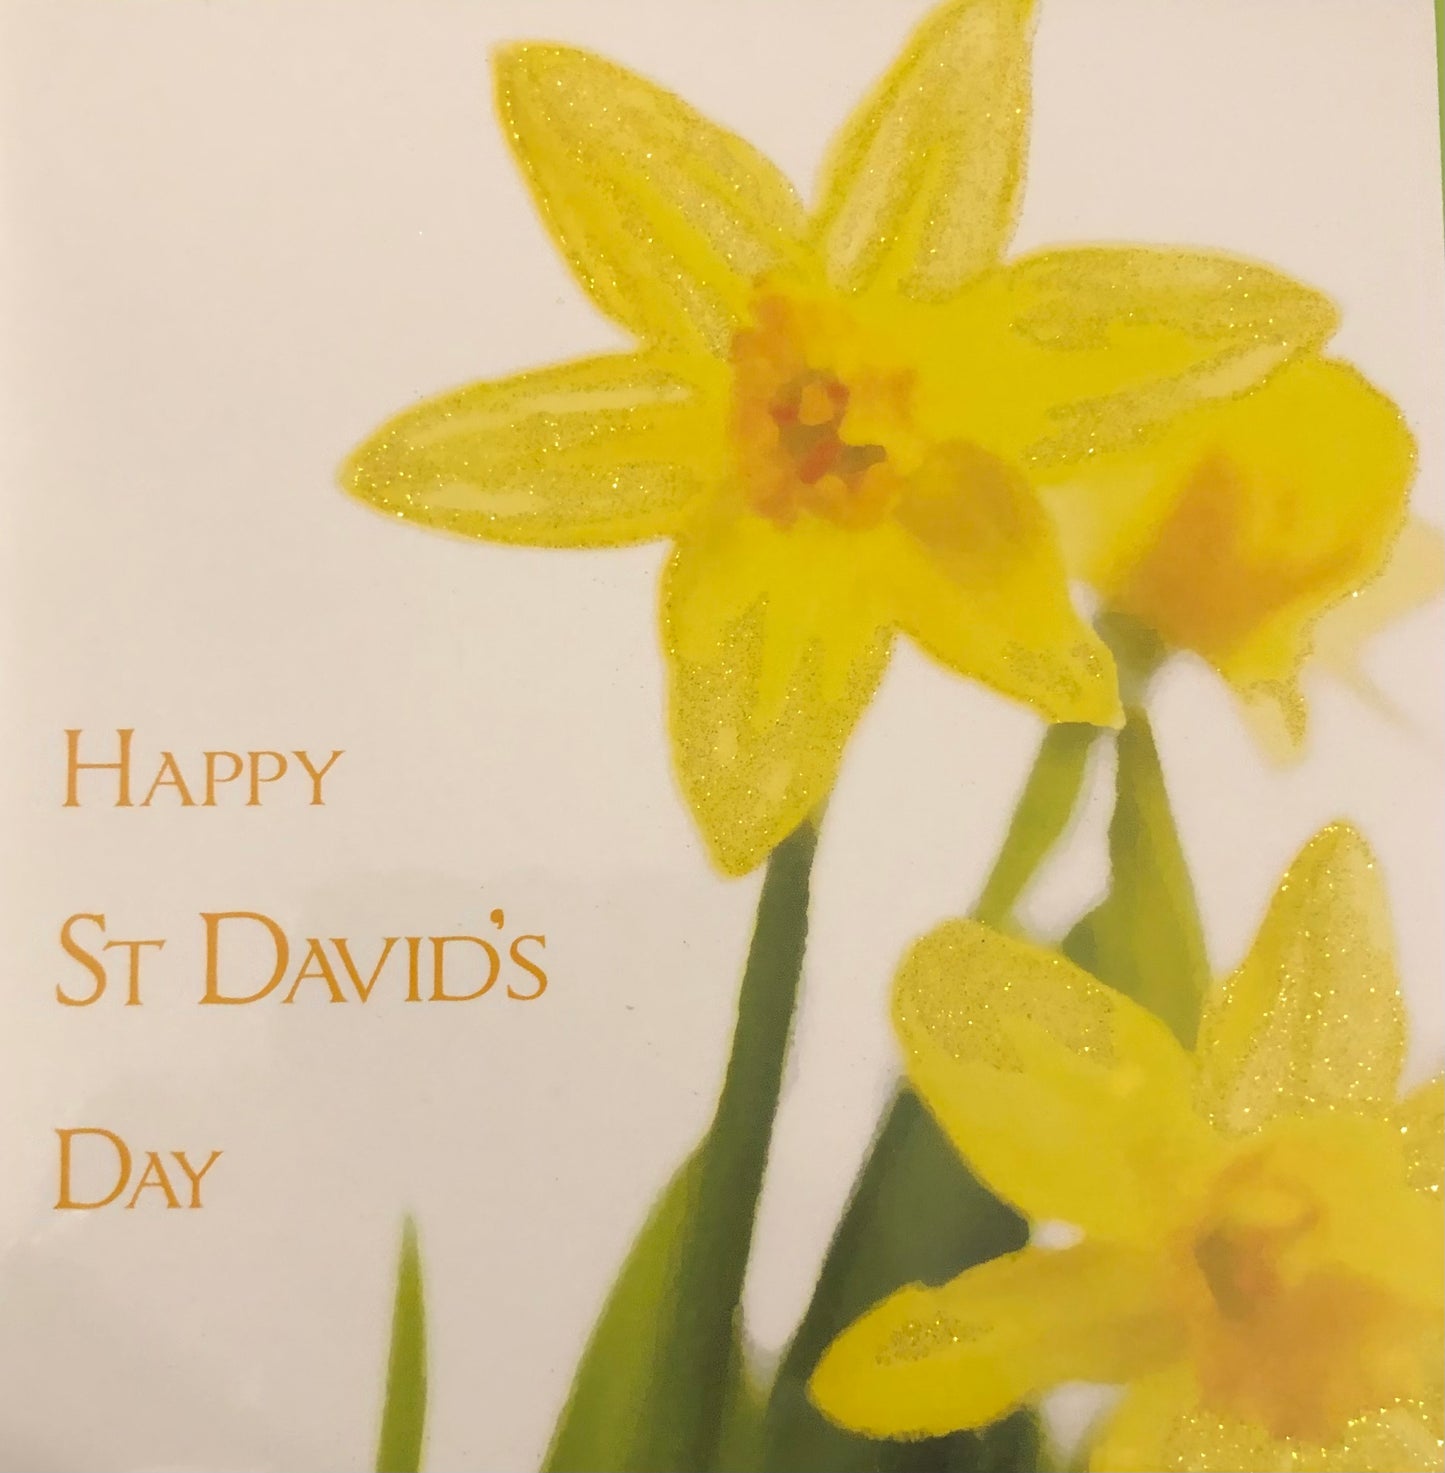 Happy St David's Day.